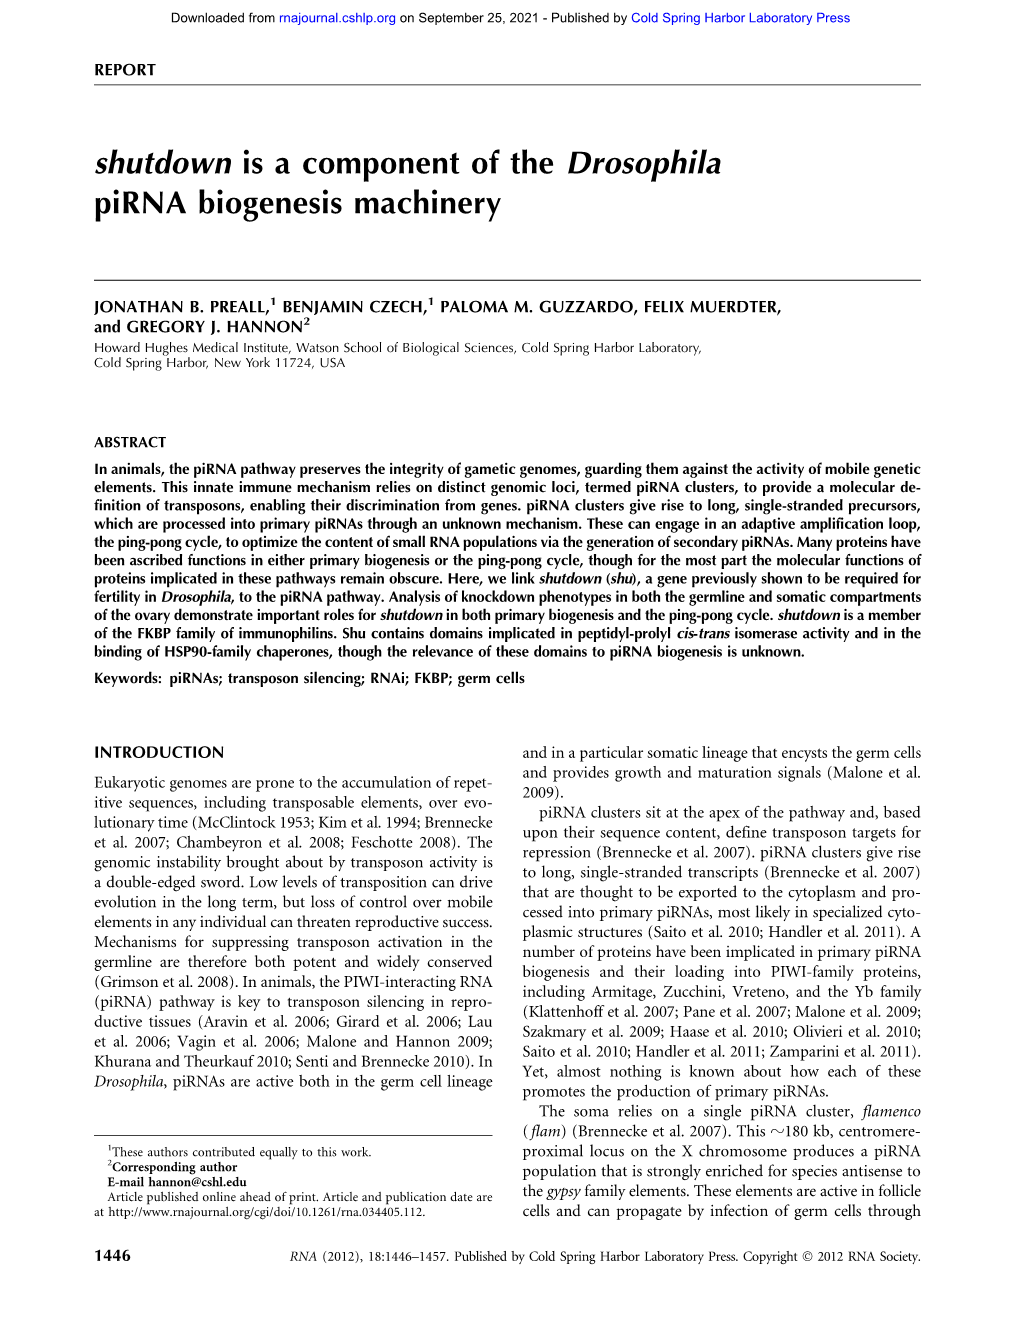 Shutdown Is a Component of the Drosophila Pirna Biogenesis Machinery